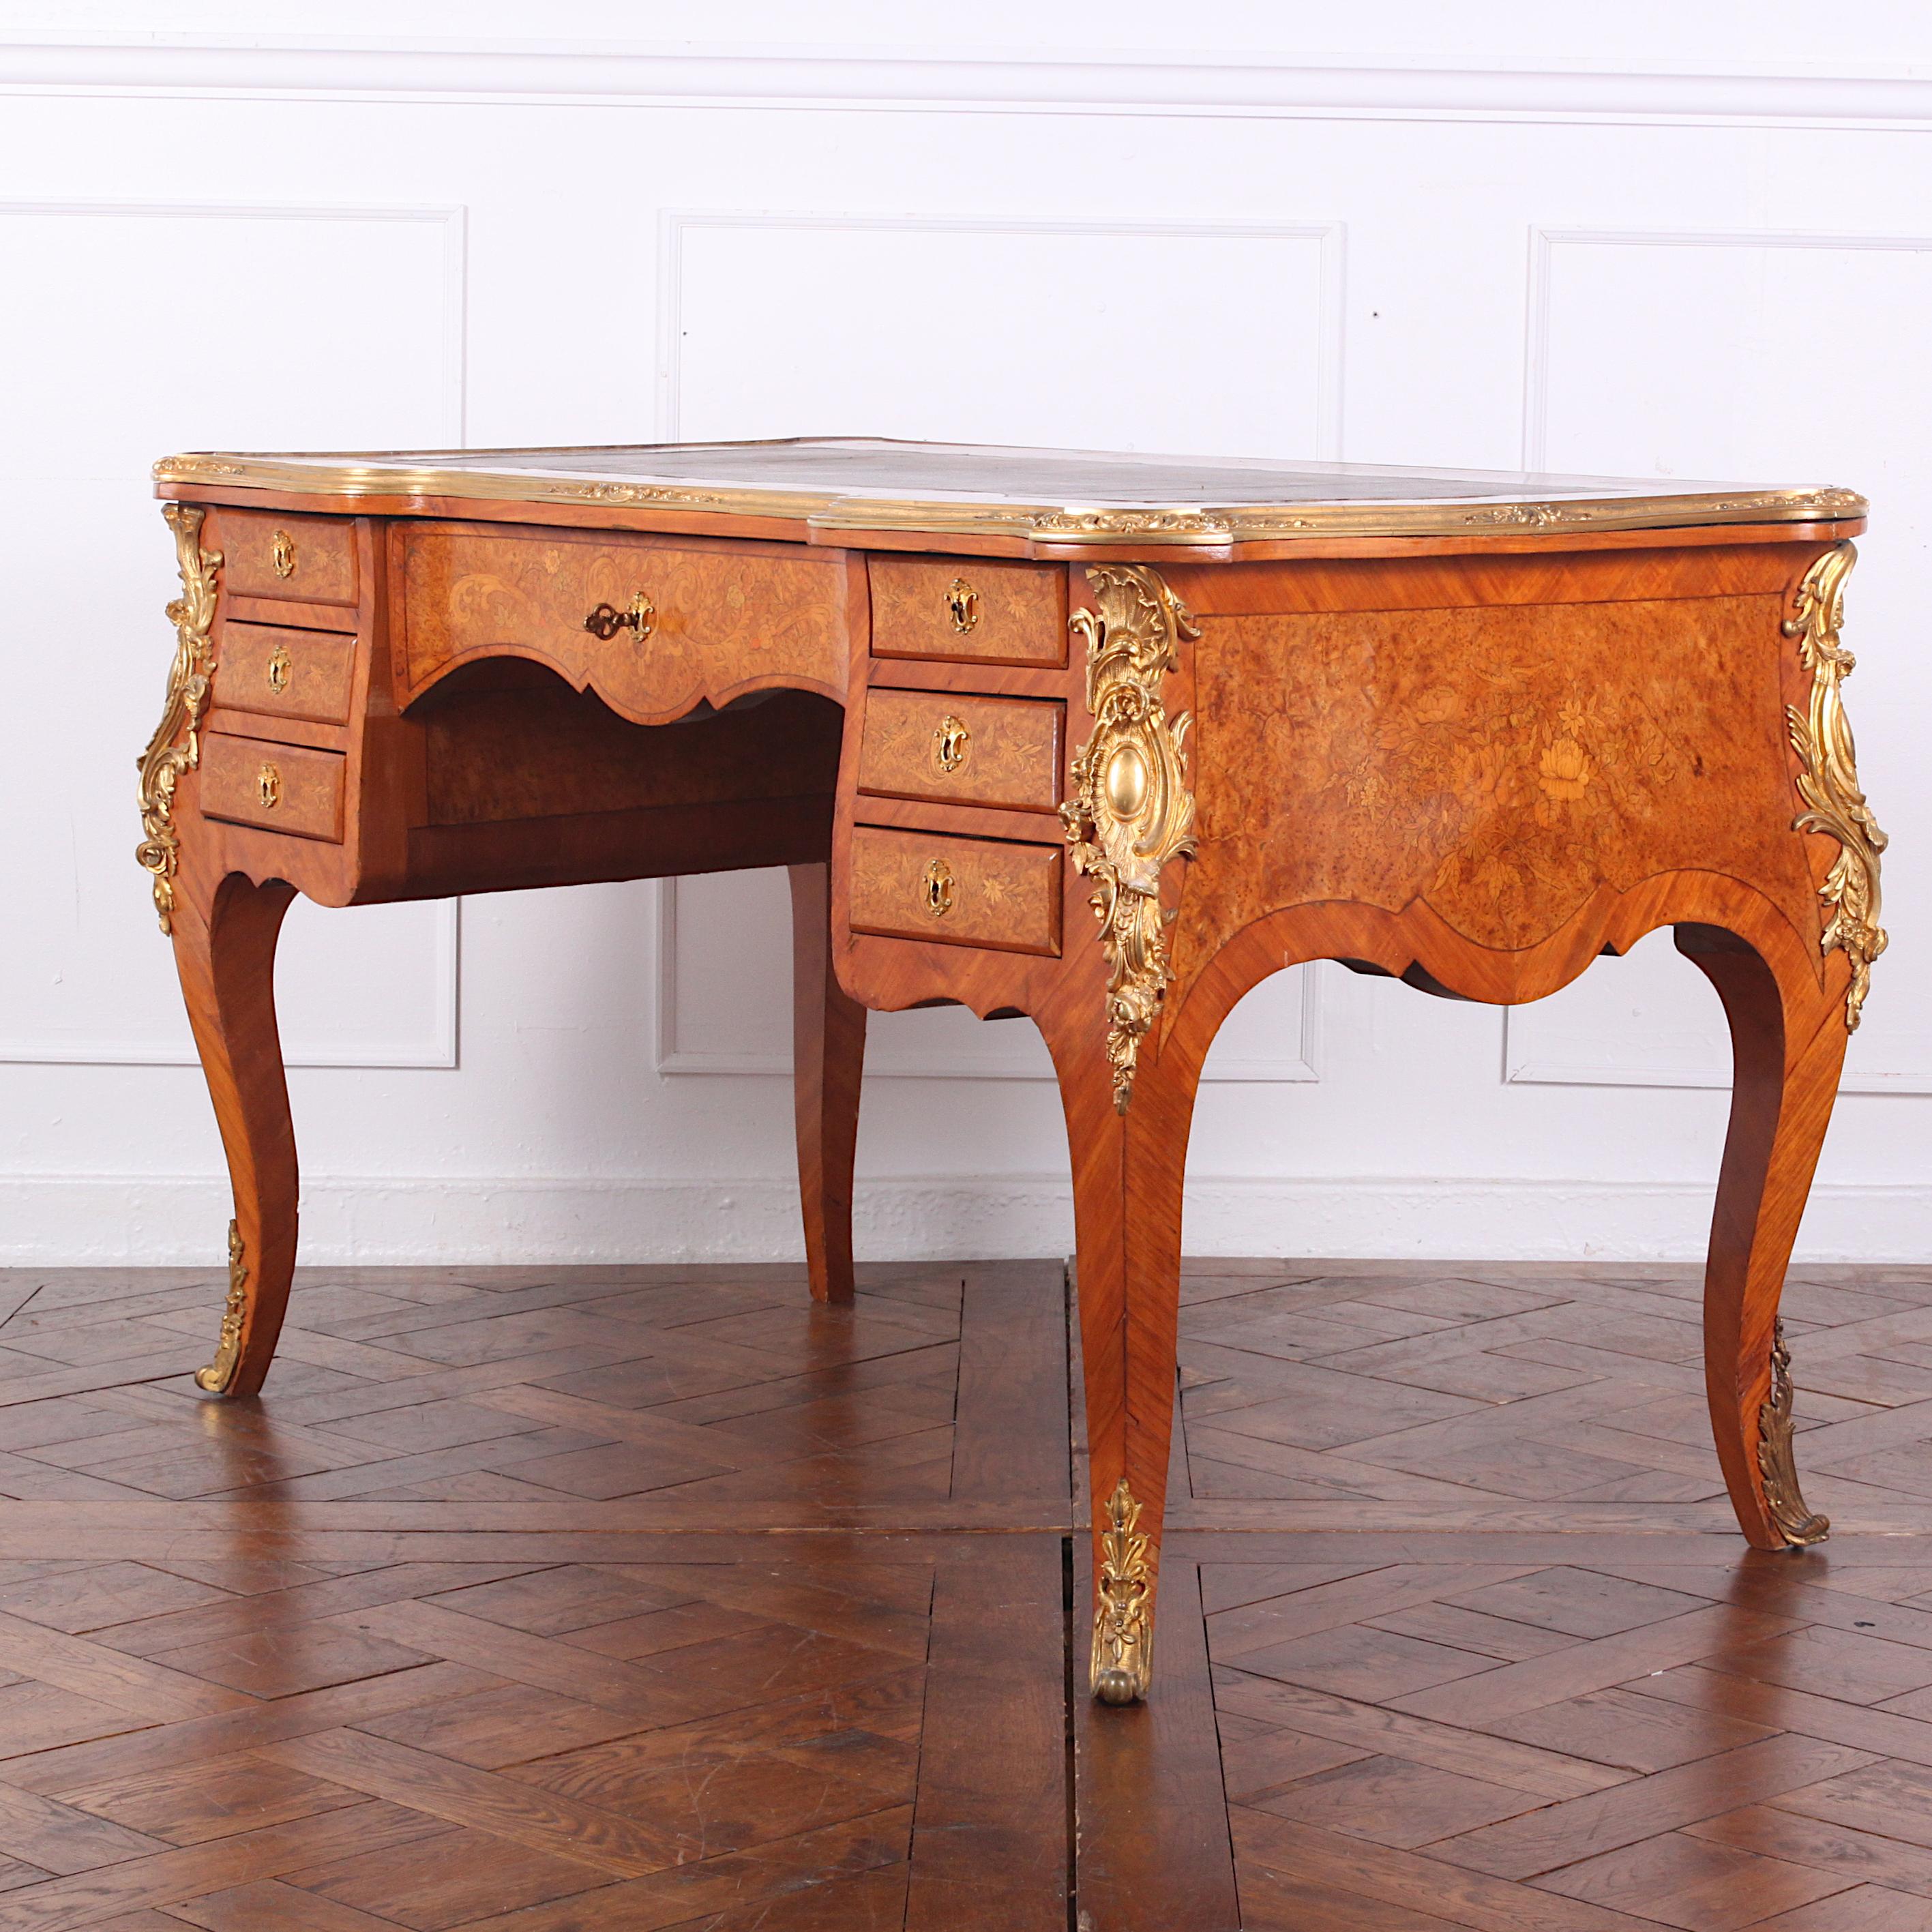 Kingwood Late 19th Century French Inlaid Louis XV Style Writing Desk Bureau Plat